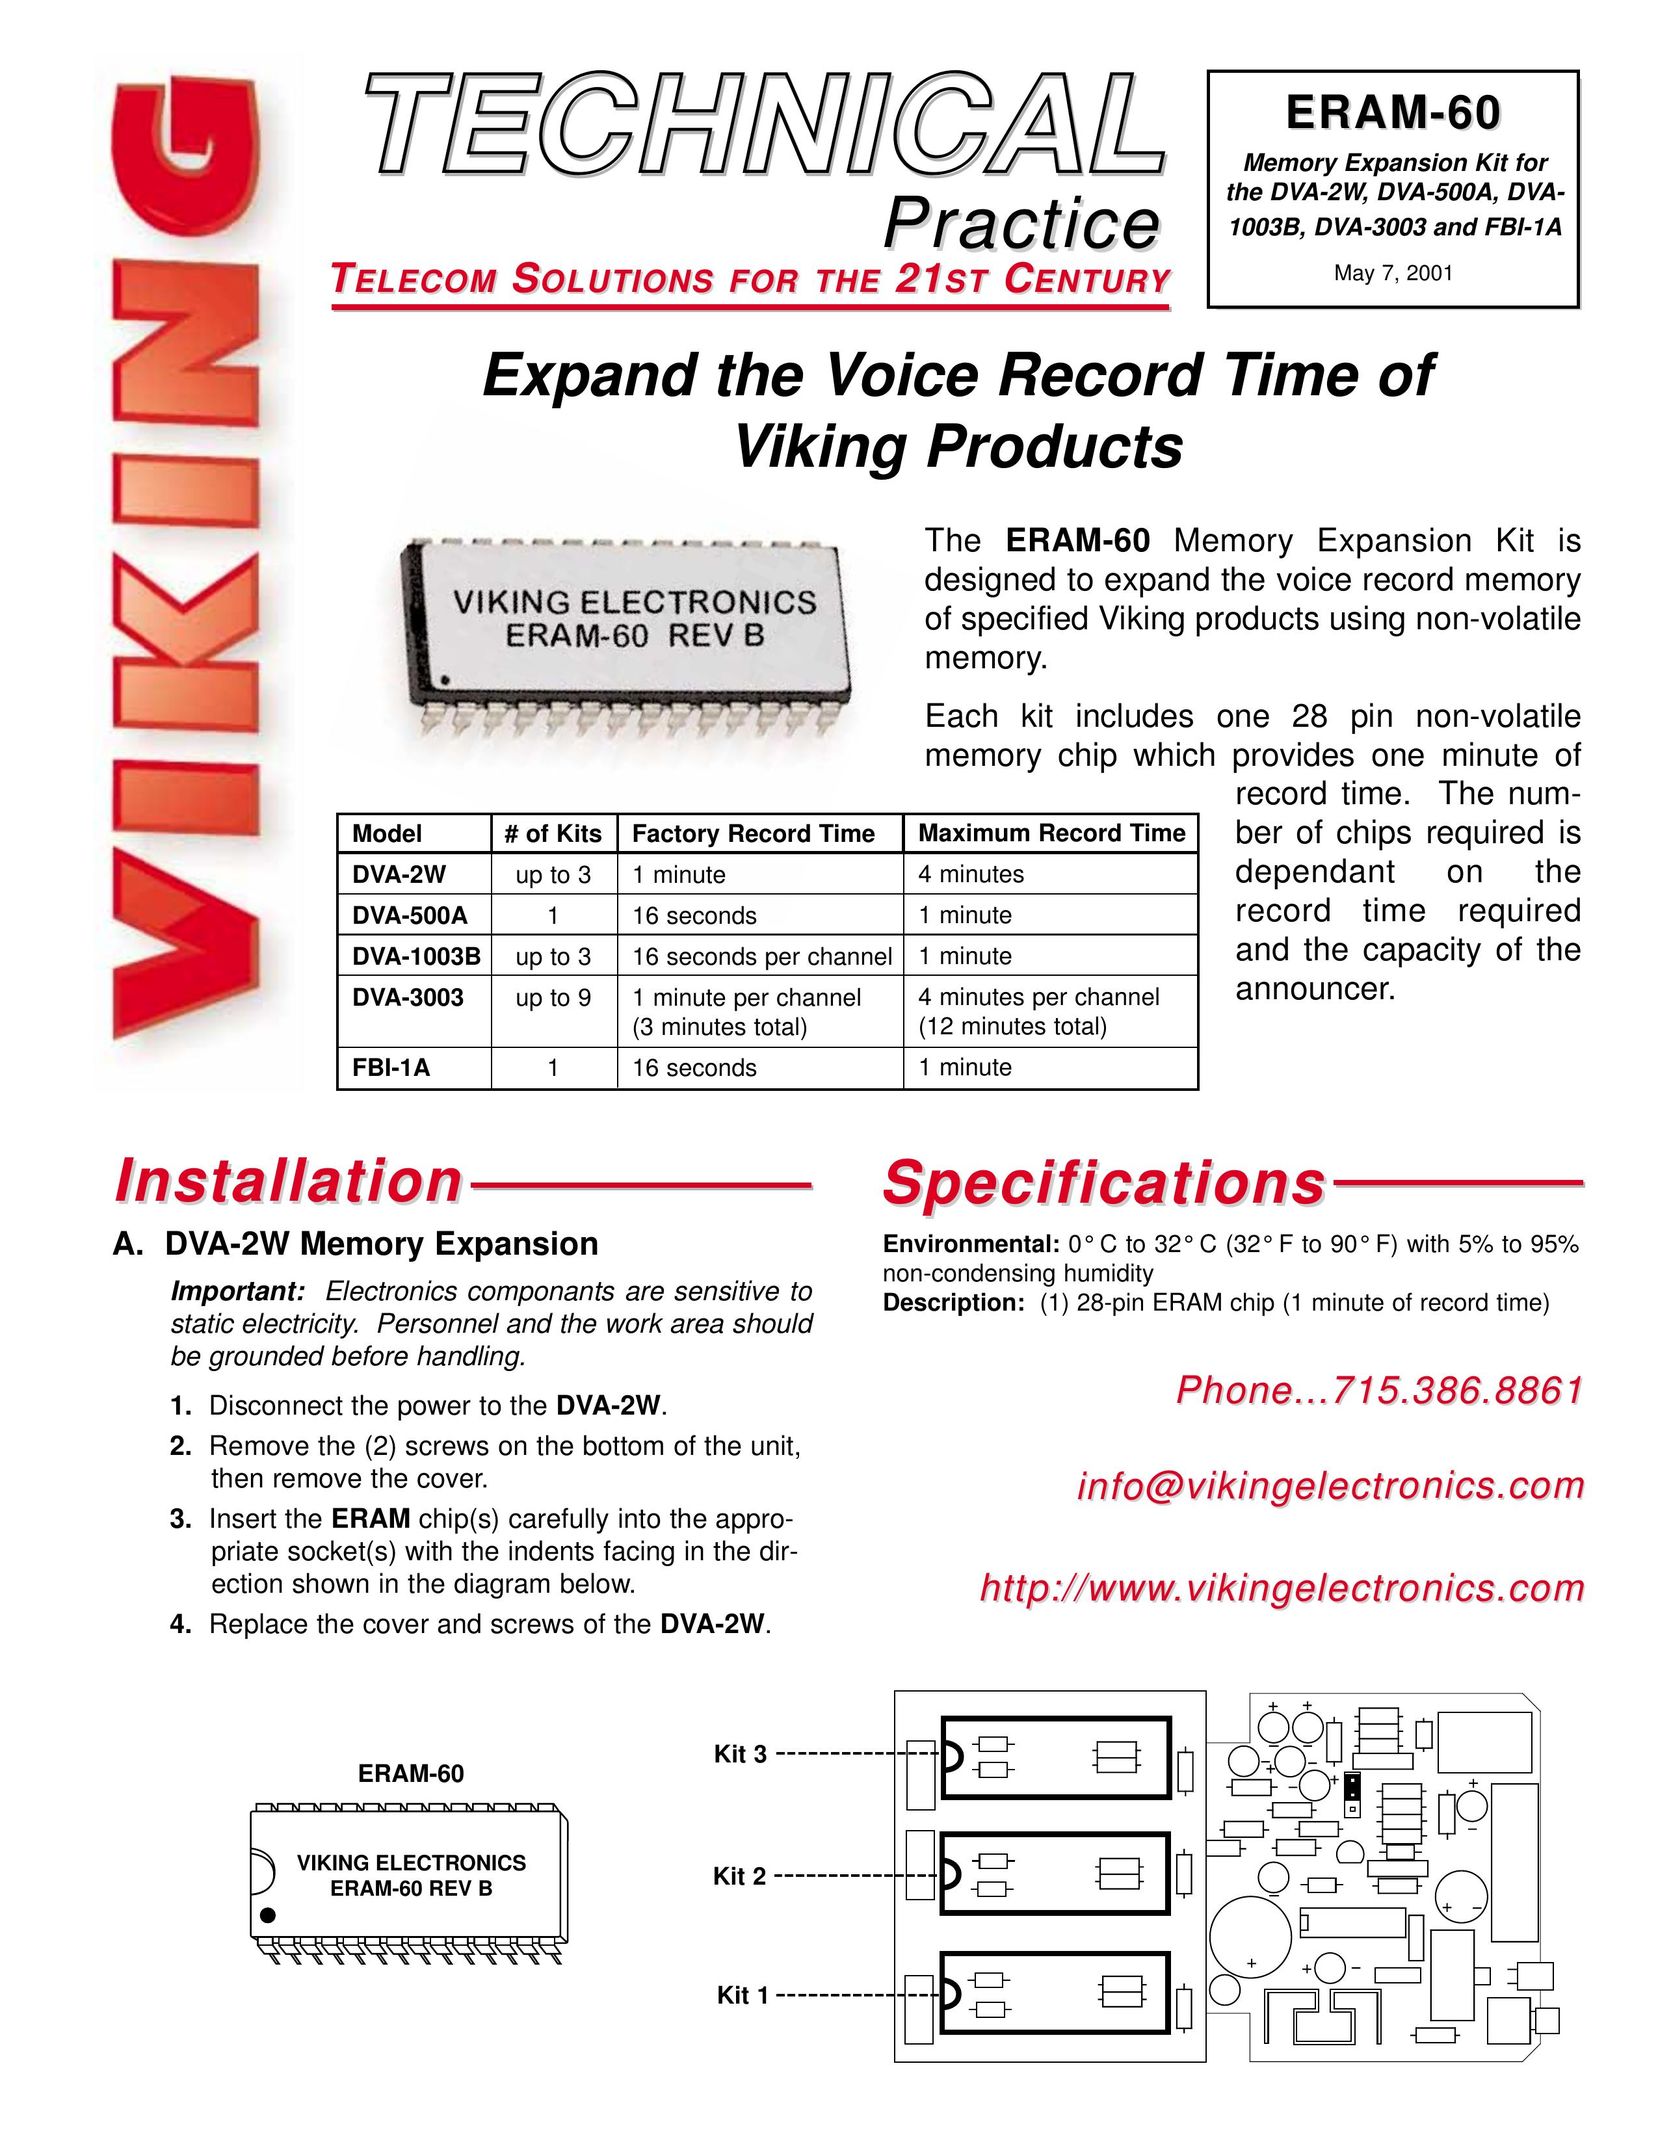 Viking Electronics DVA- 1003B Video Gaming Accessories User Manual